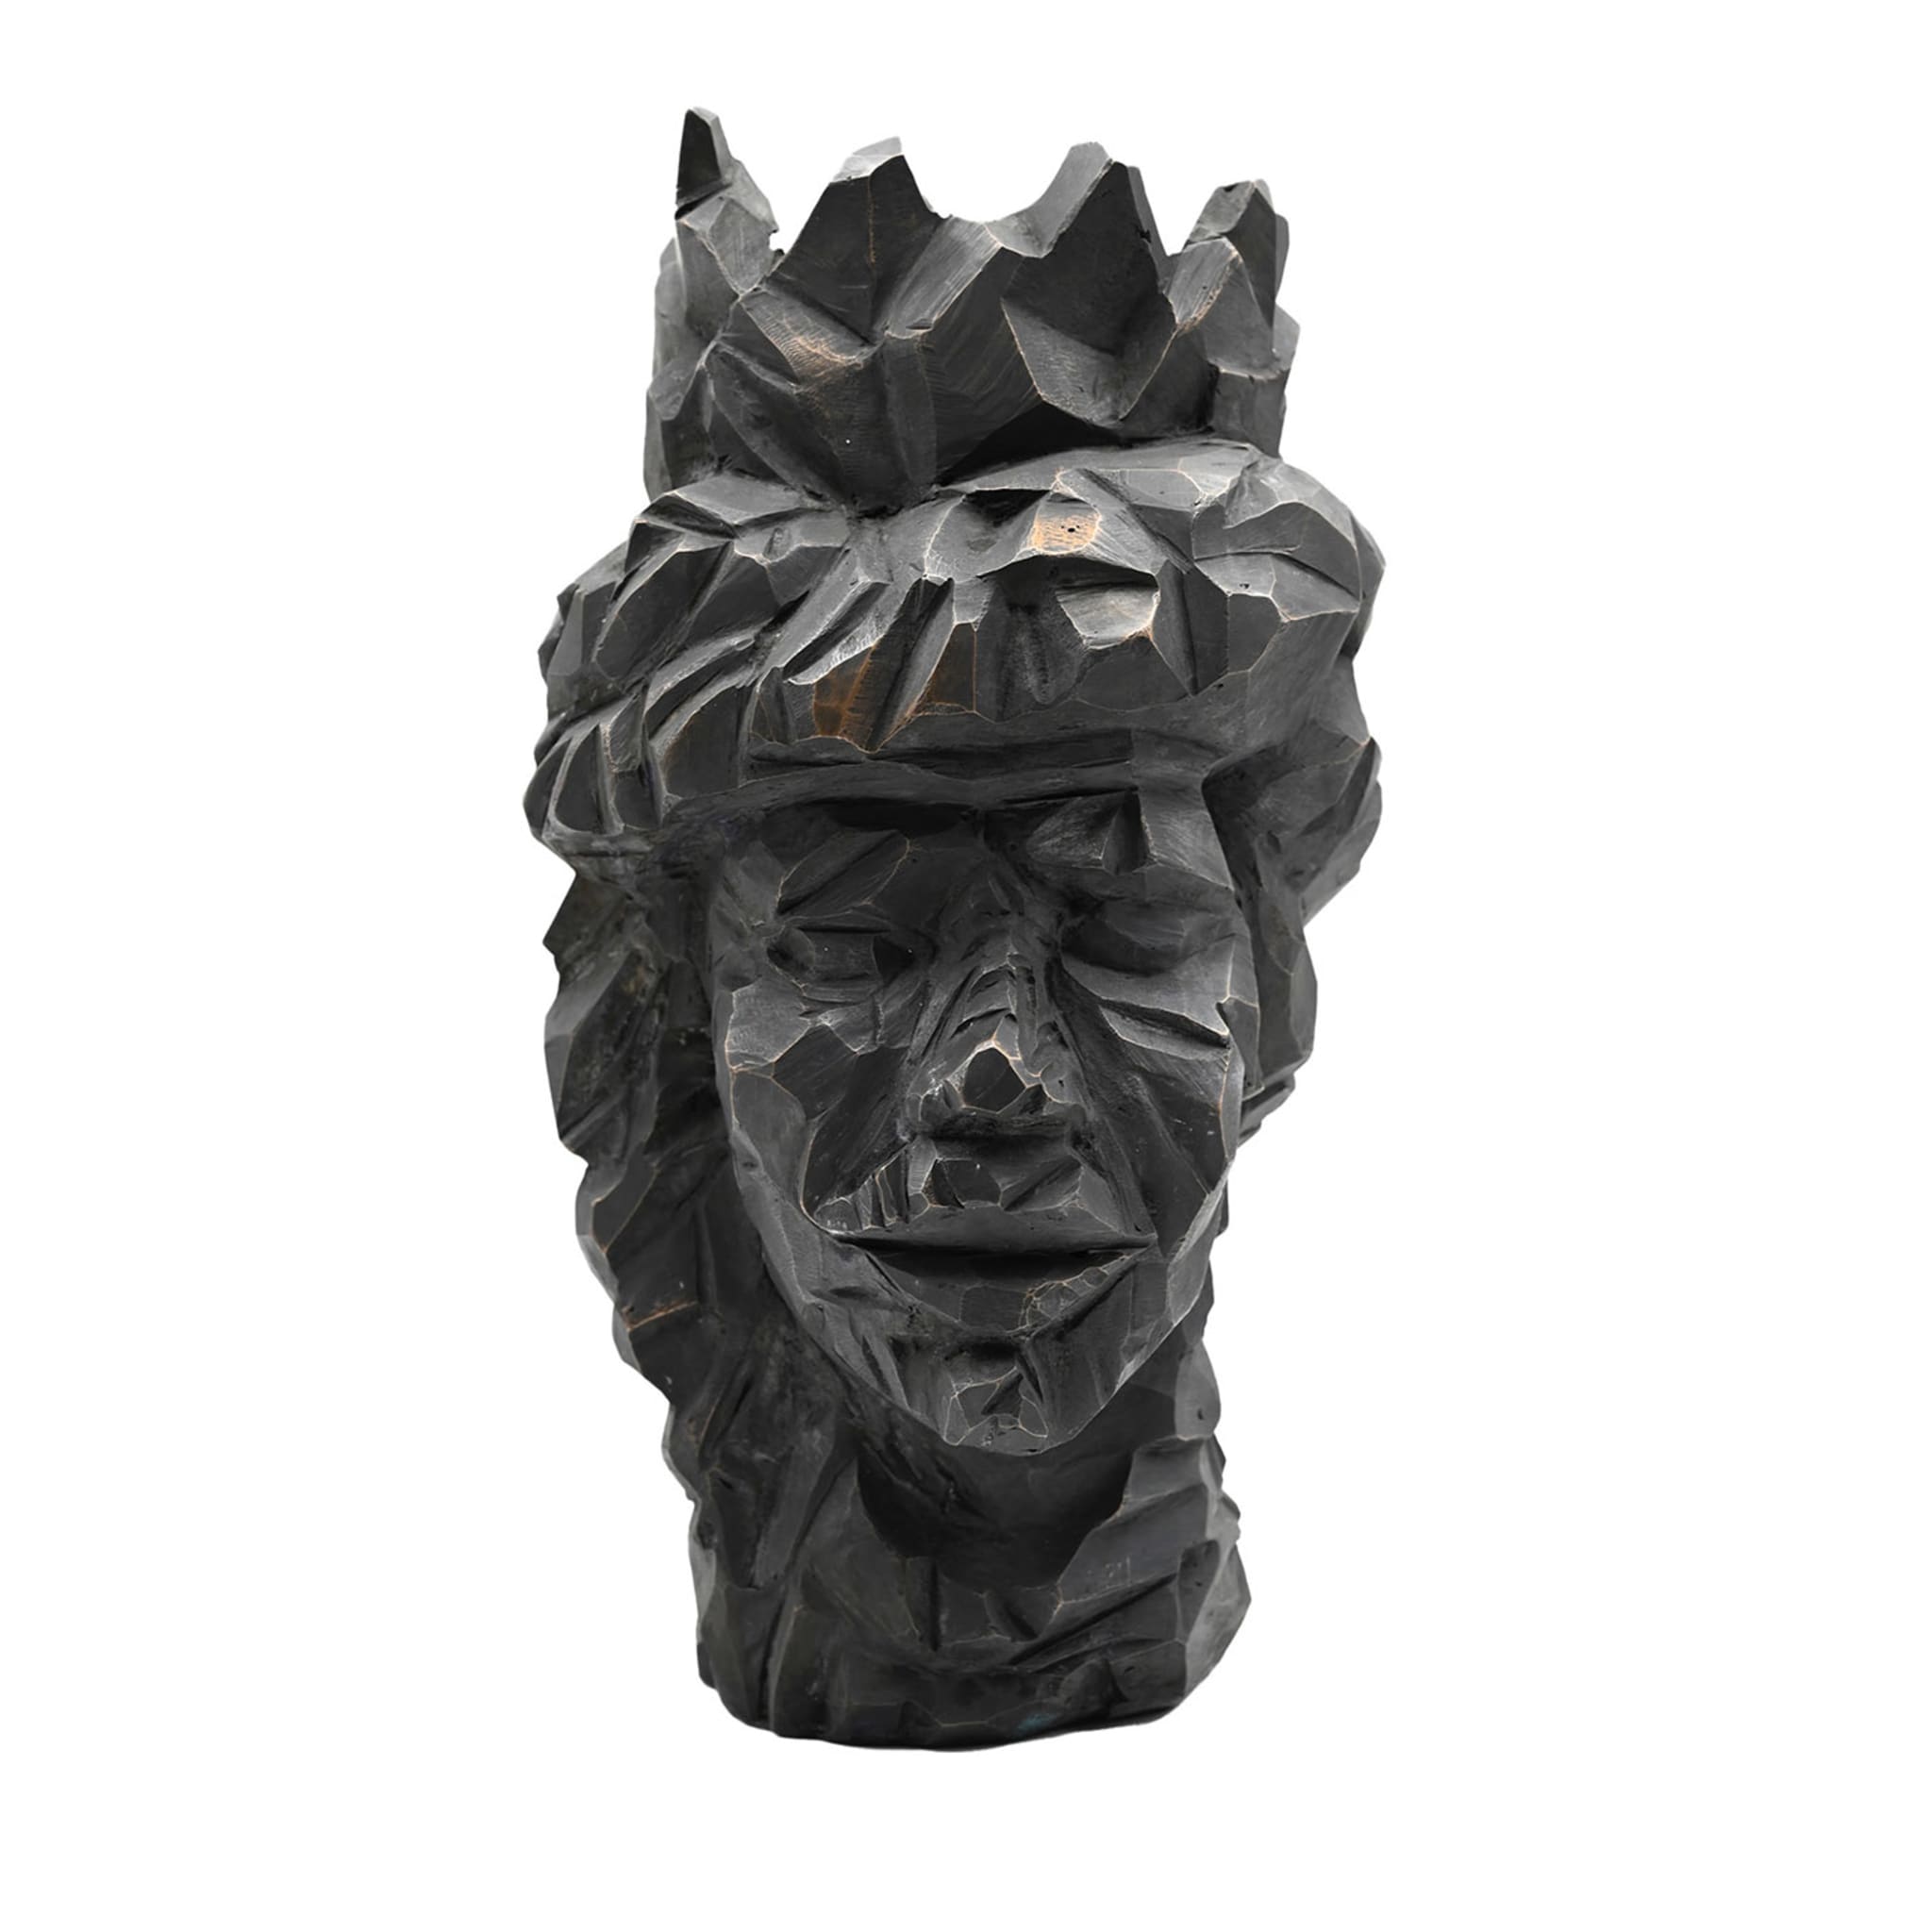 Tête de maure anthropomorphe en bronze #1 - Vue principale